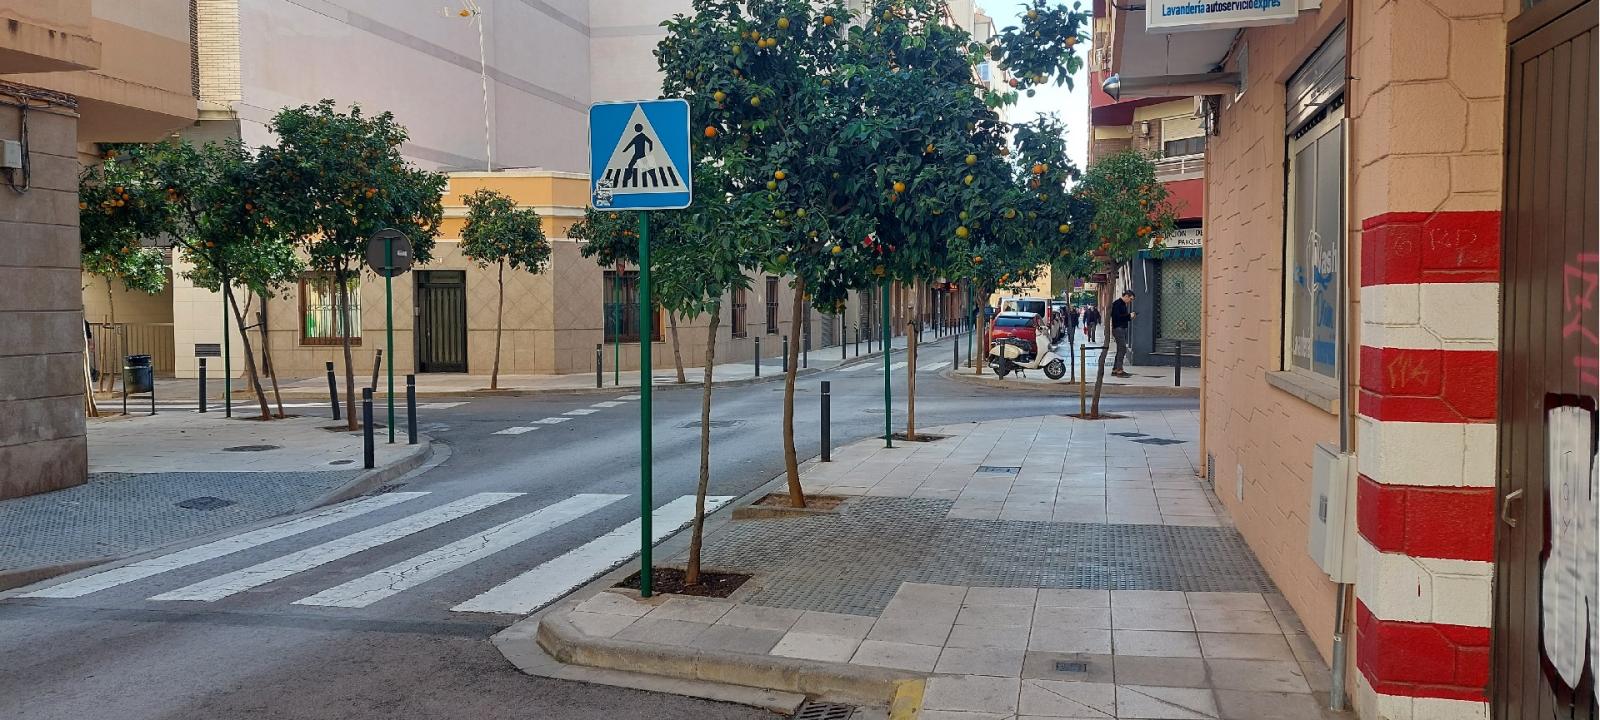 Business local for sale in Castellón de la Plana